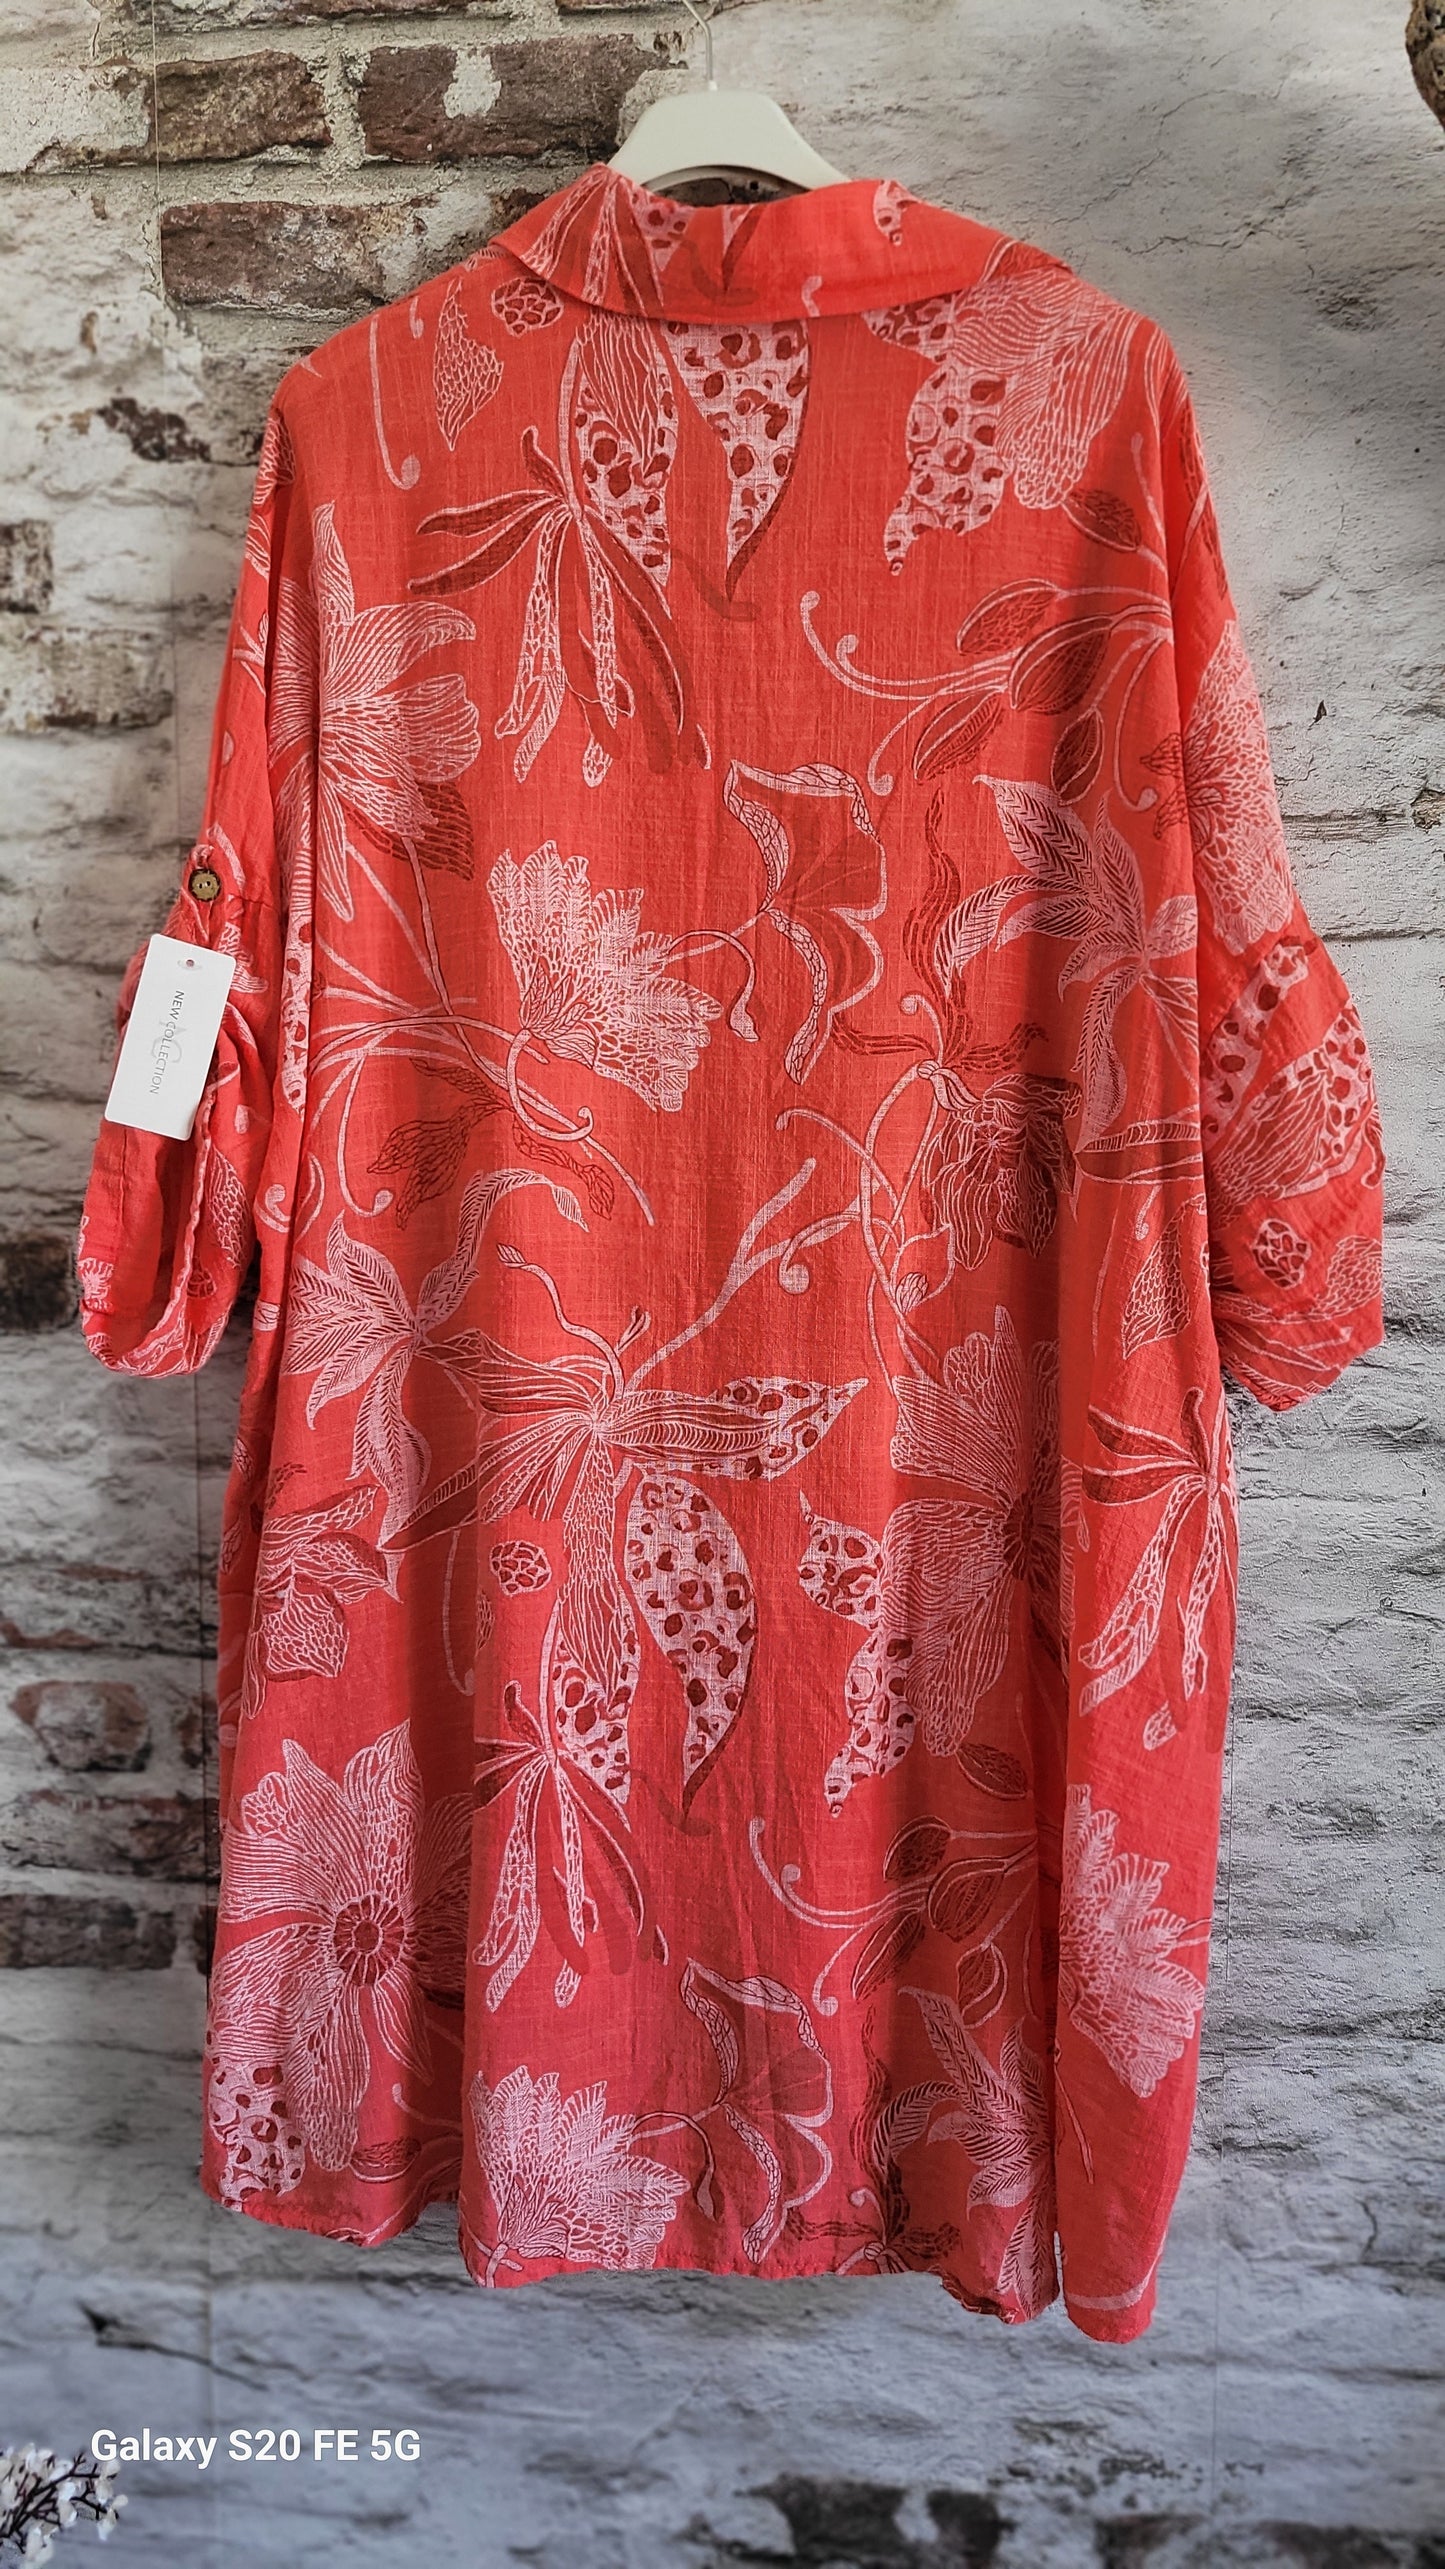 🌸 Mid-length floral shirt